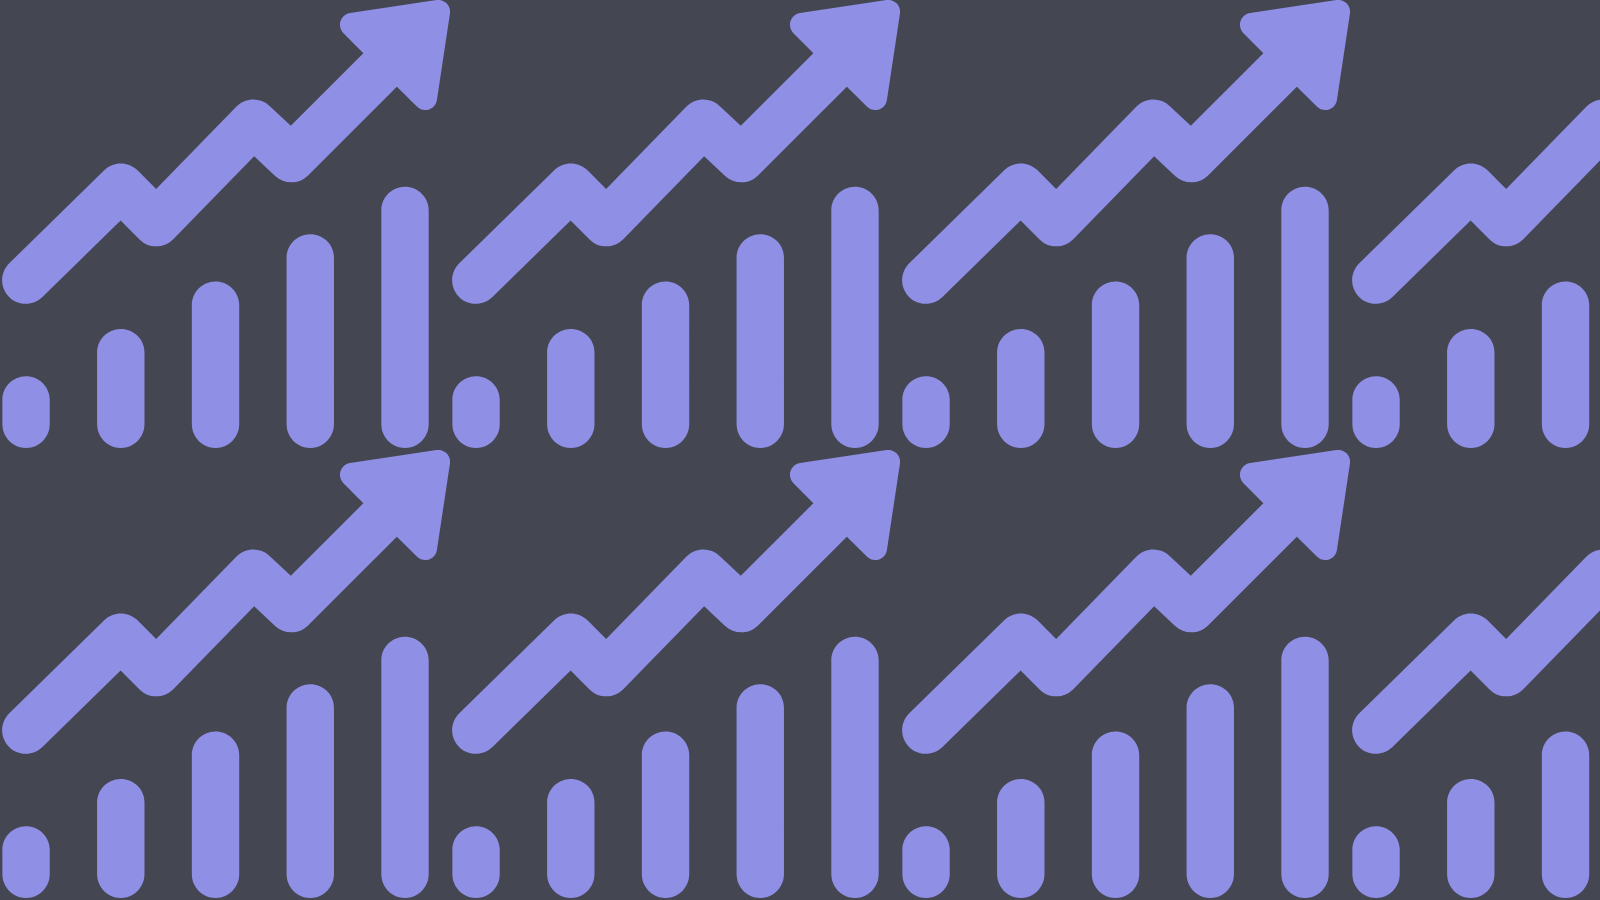 Upward trending bar graphs with trend arrows